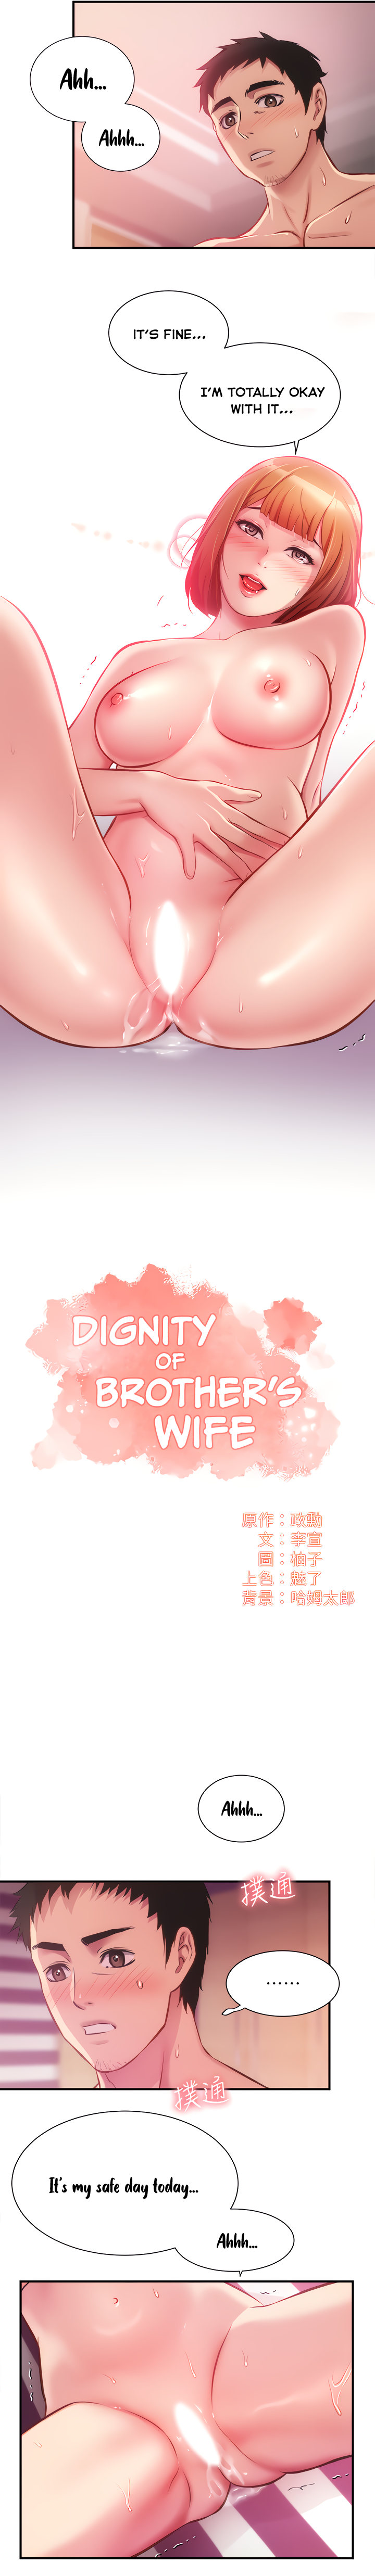 The image Brothers Wife Dignity - Chapter 15 - RuJeYiyfuPzSFS4 - ManhwaManga.io